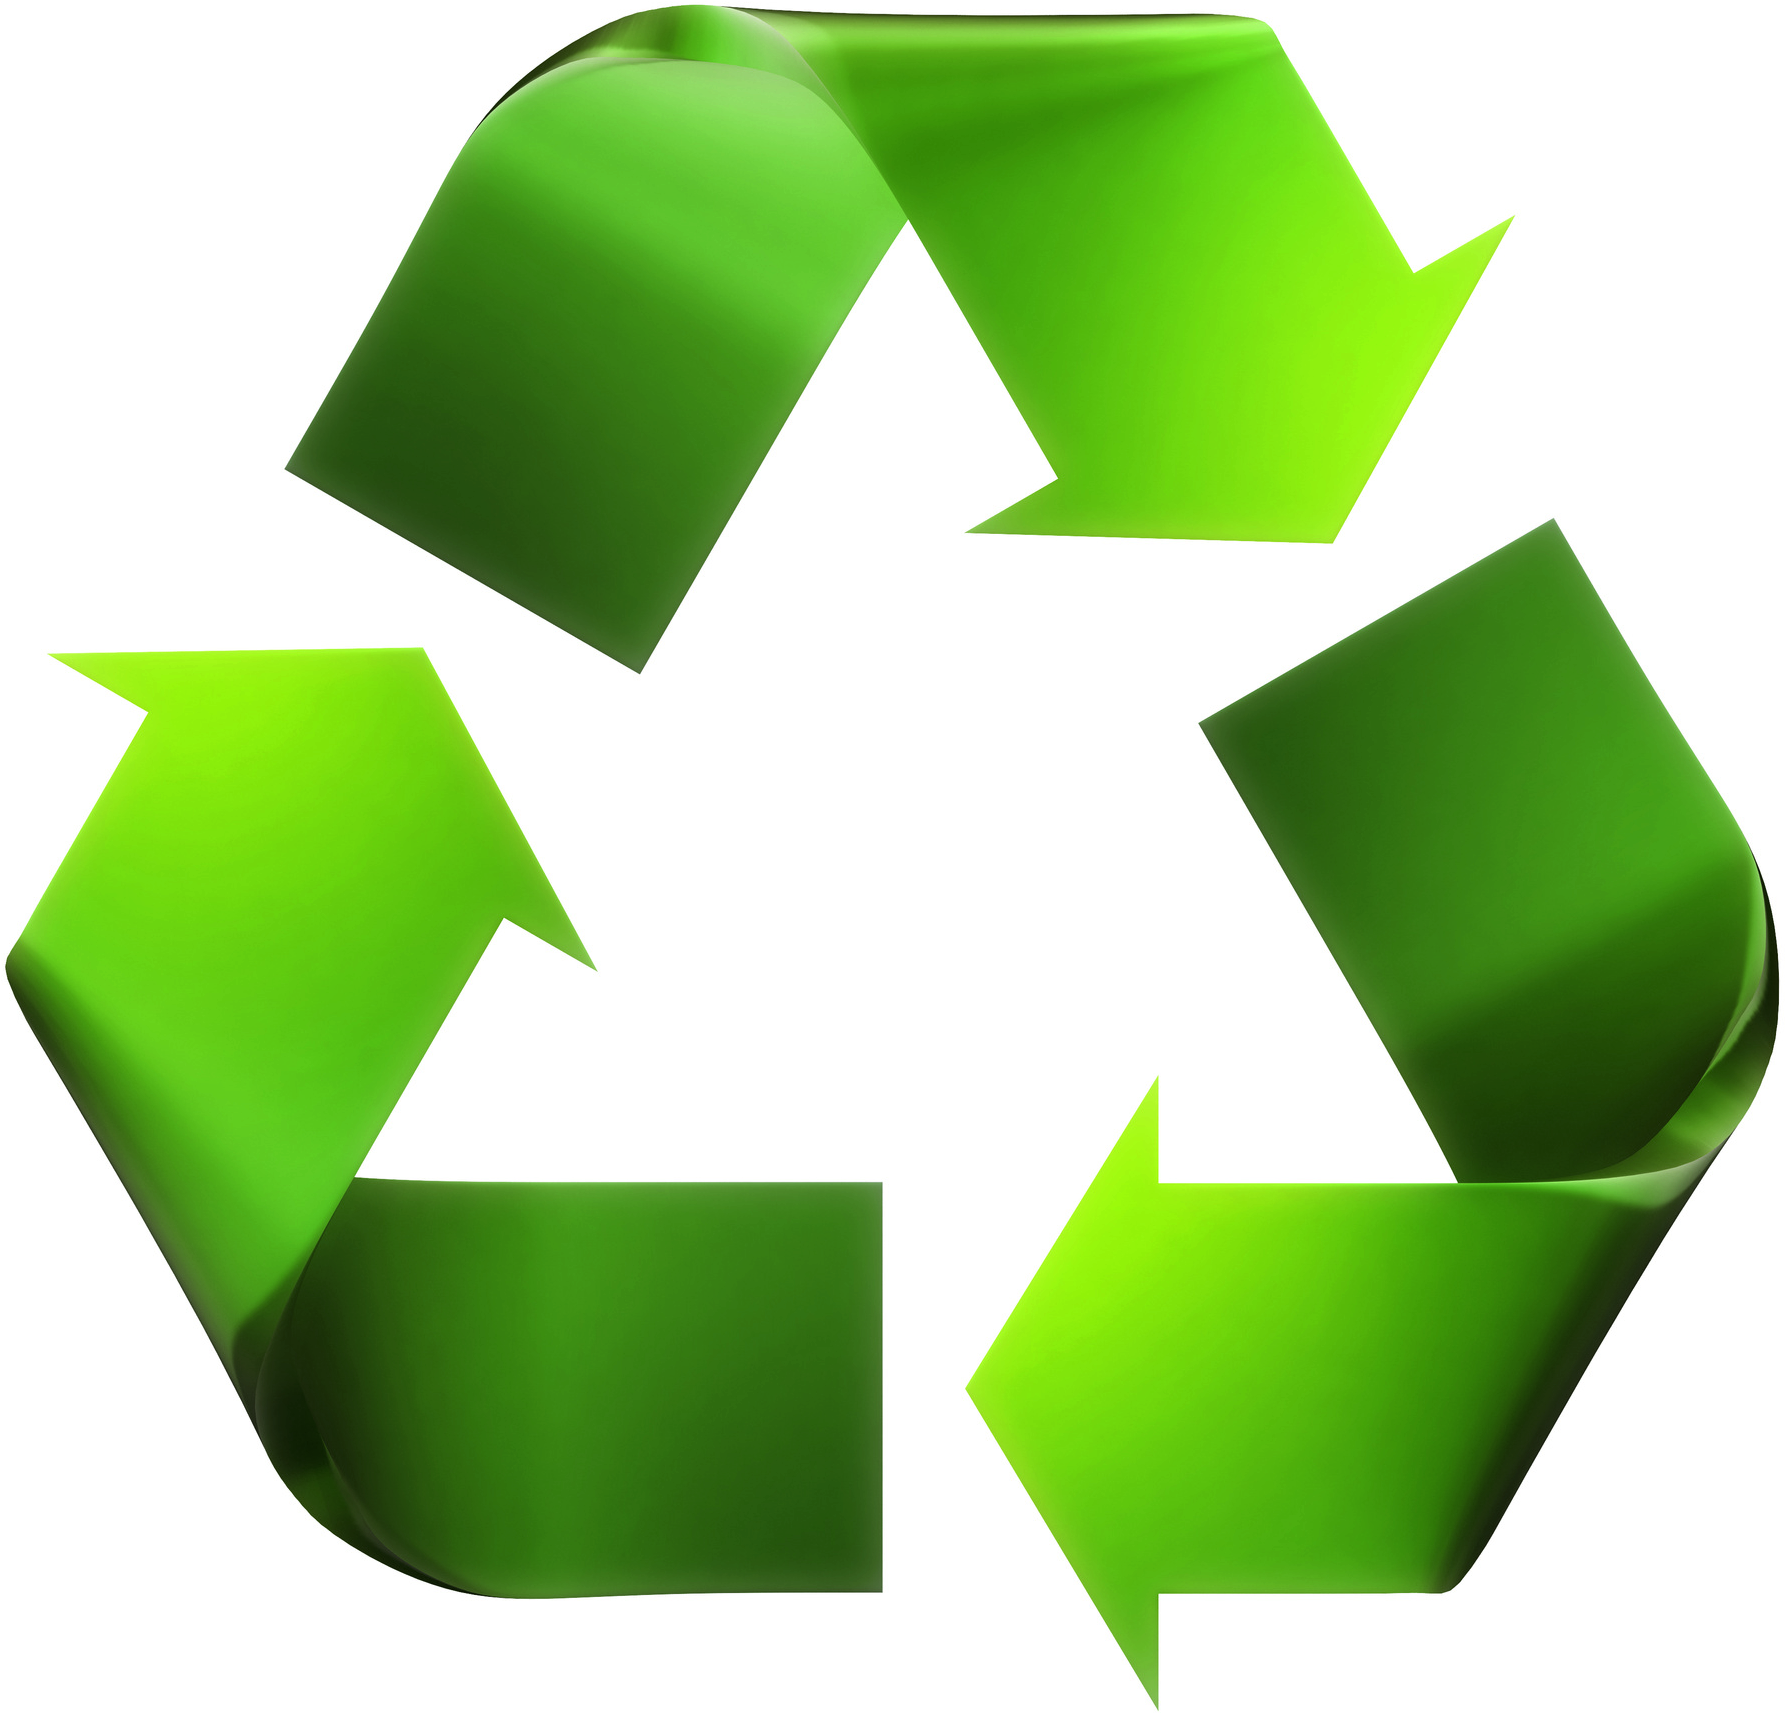 Recycling Symbol Waste Hierarchy Plastic - Recycling Symbol Waste Hierarchy Plastic (1924x1924)